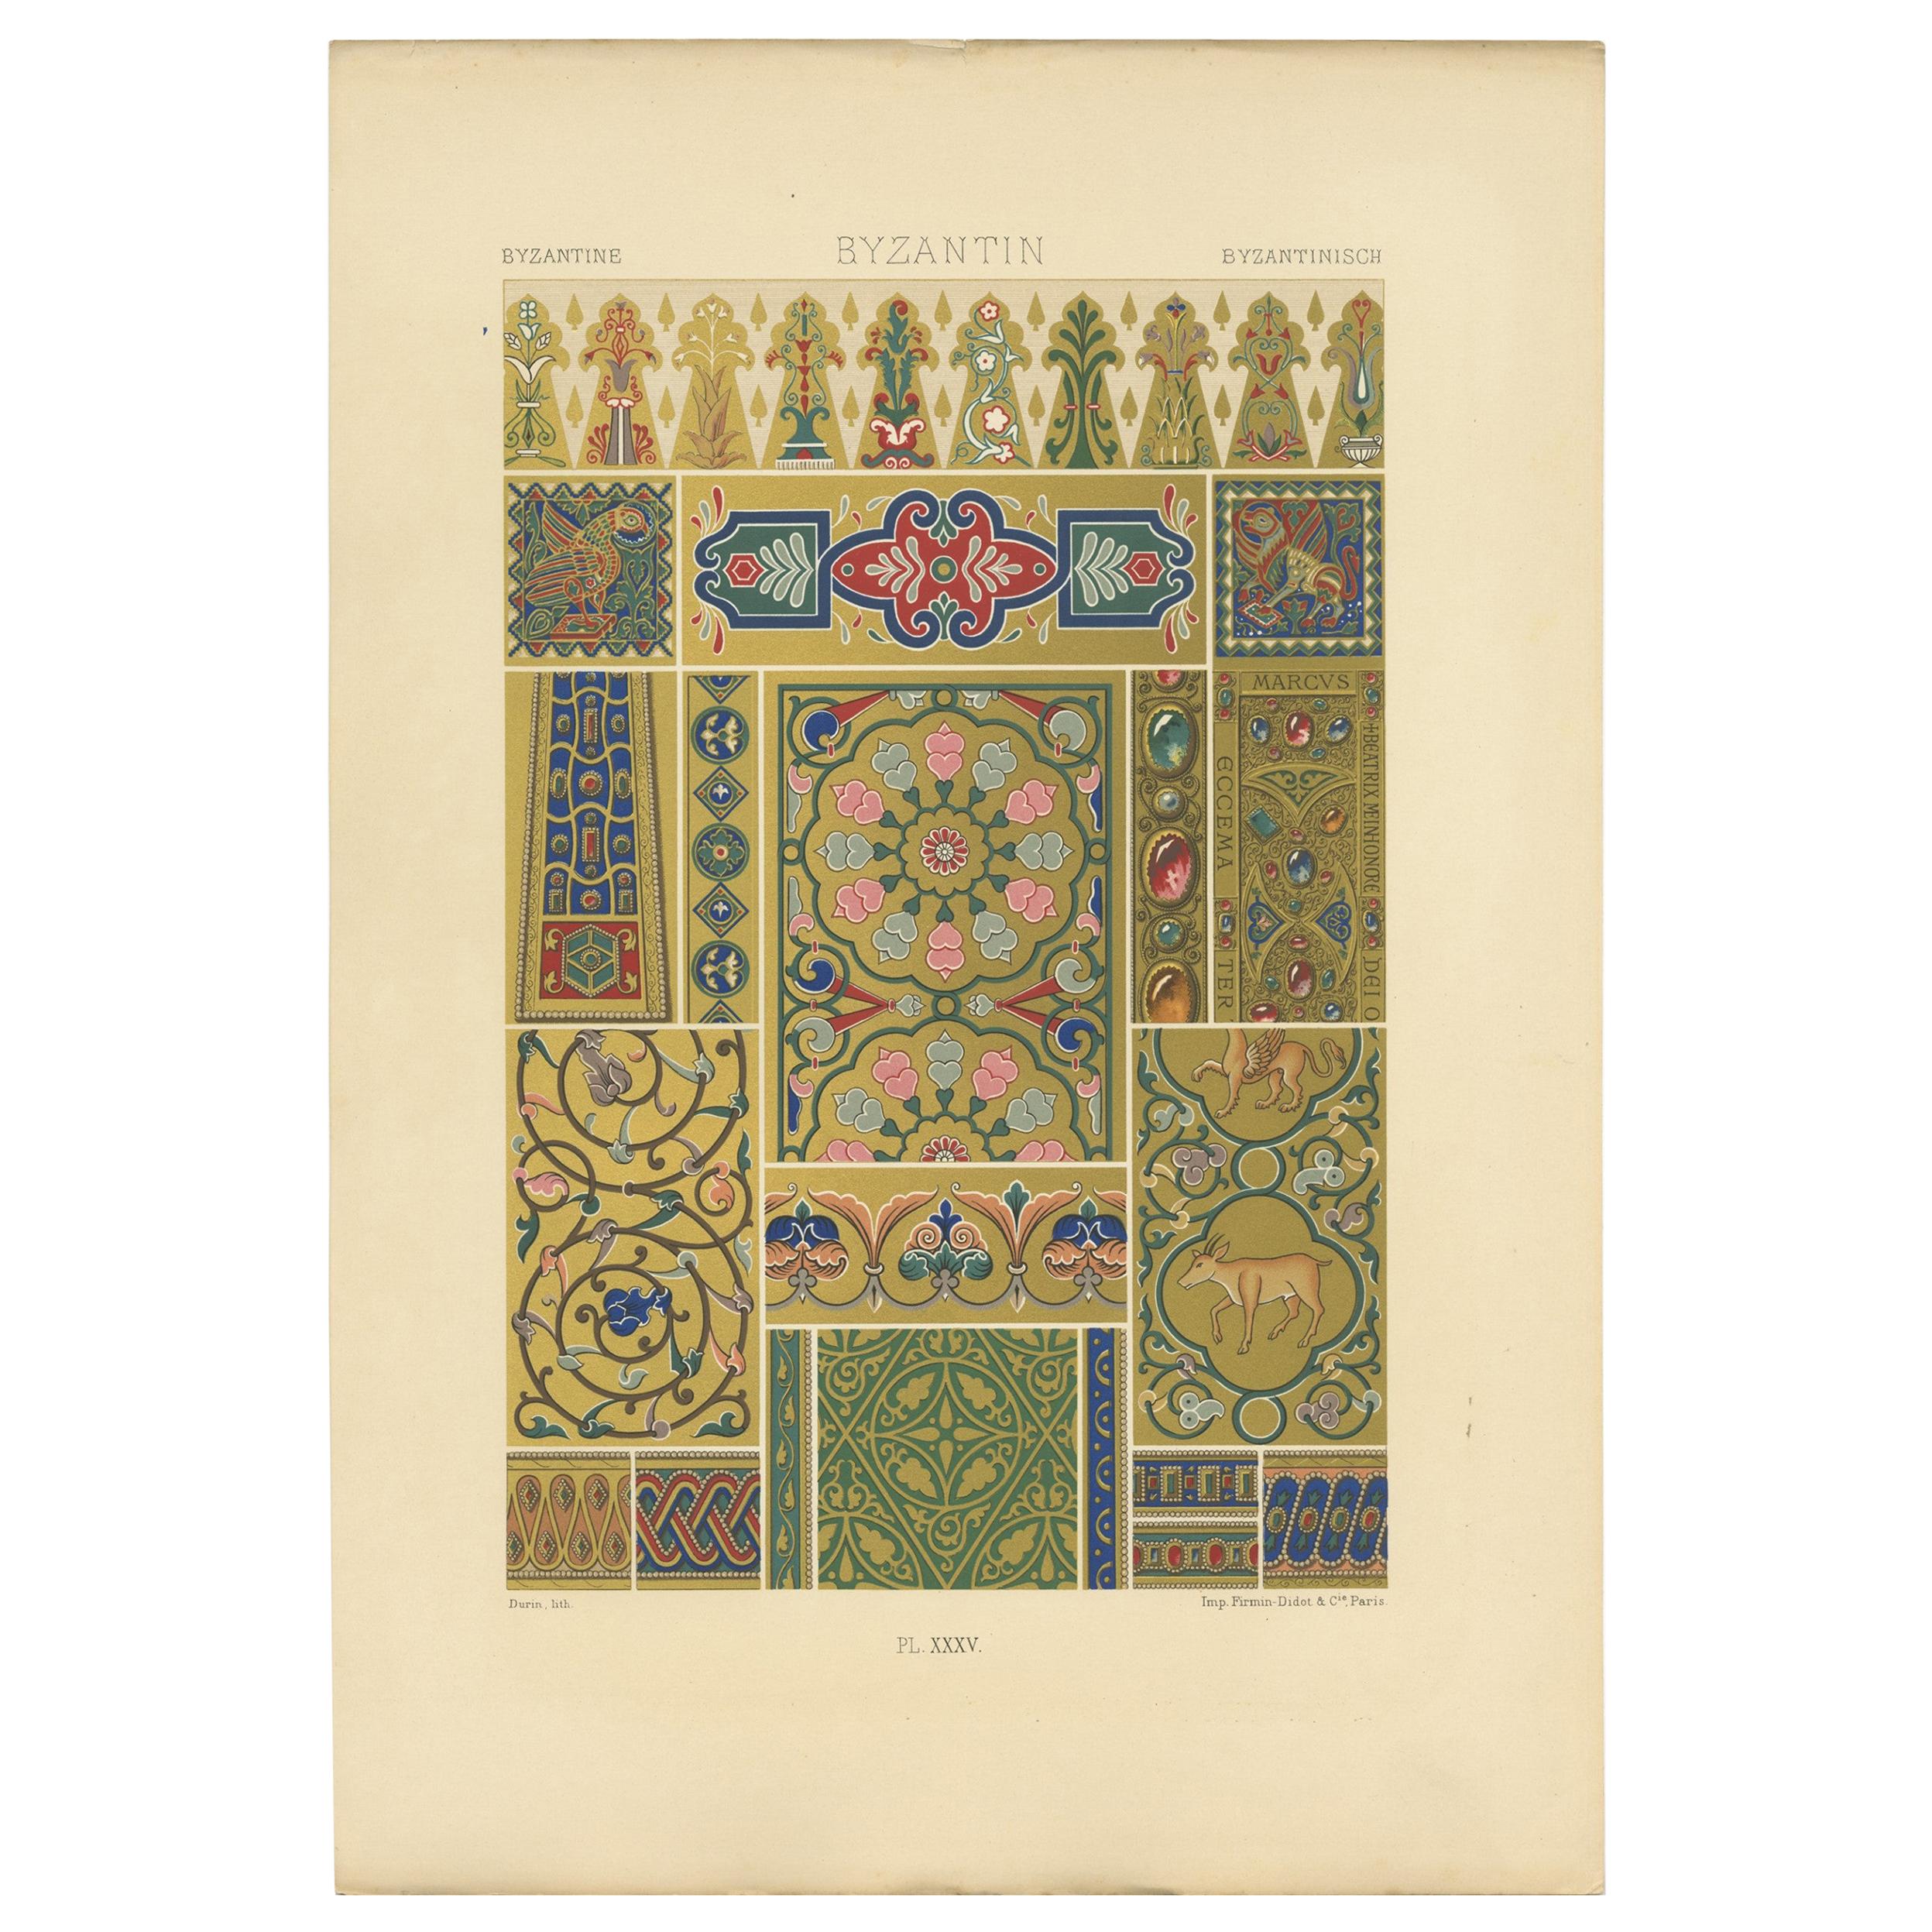 Antique Print of Byzantine Ornaments by Racinet, circa 1890